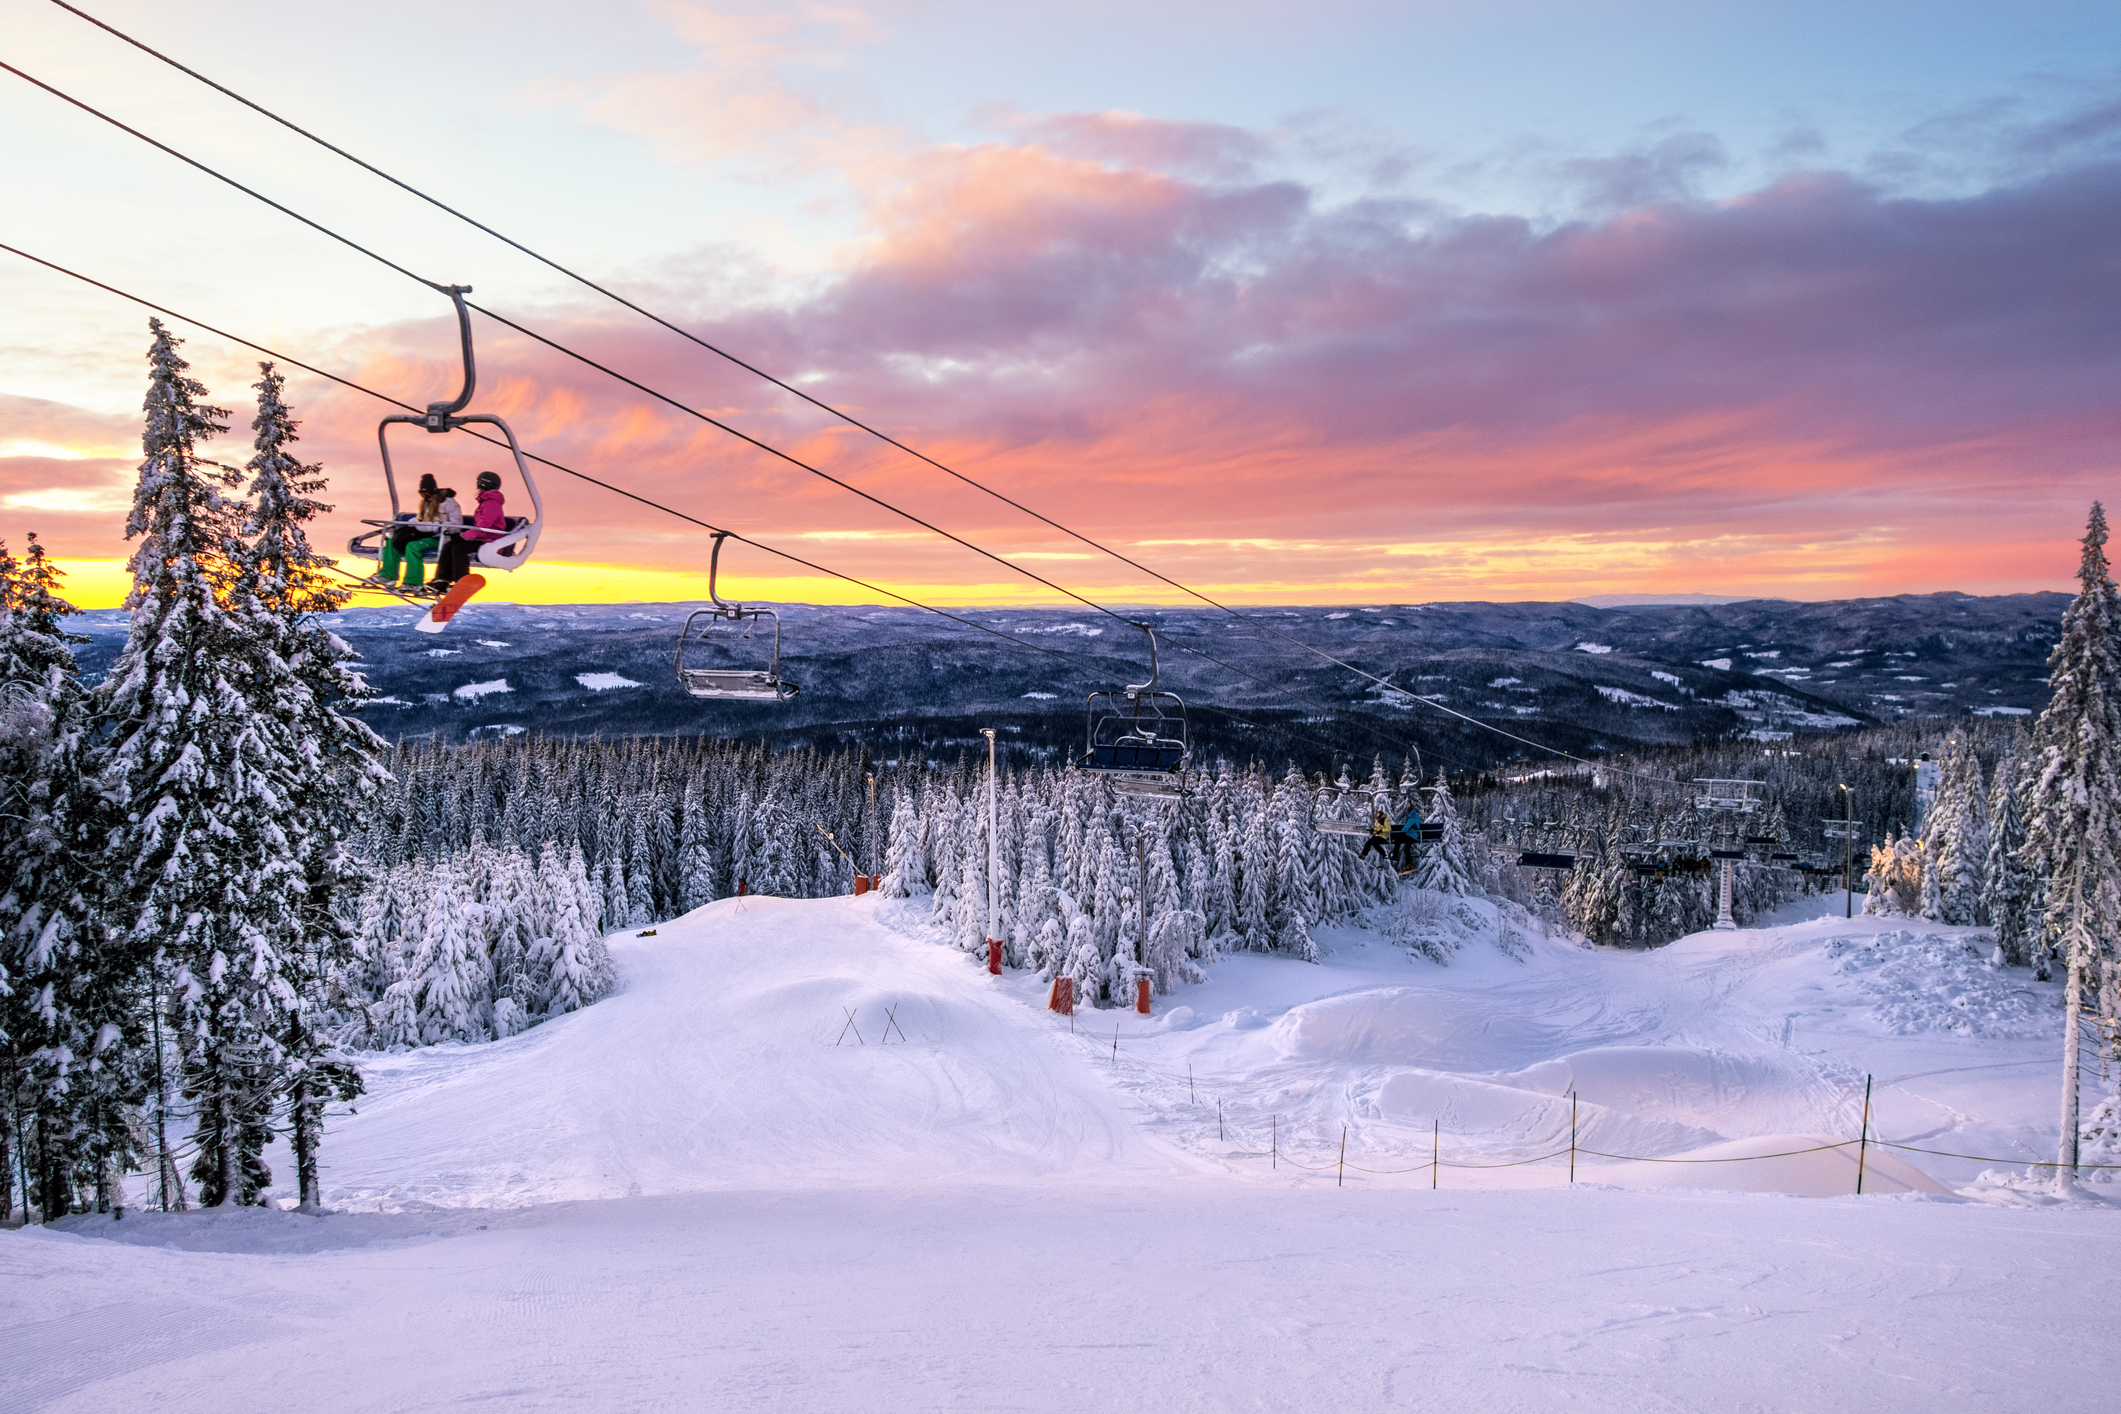 Tryvann ski resort with skiers taking the lift, Oslo Norway – Svarstad ...